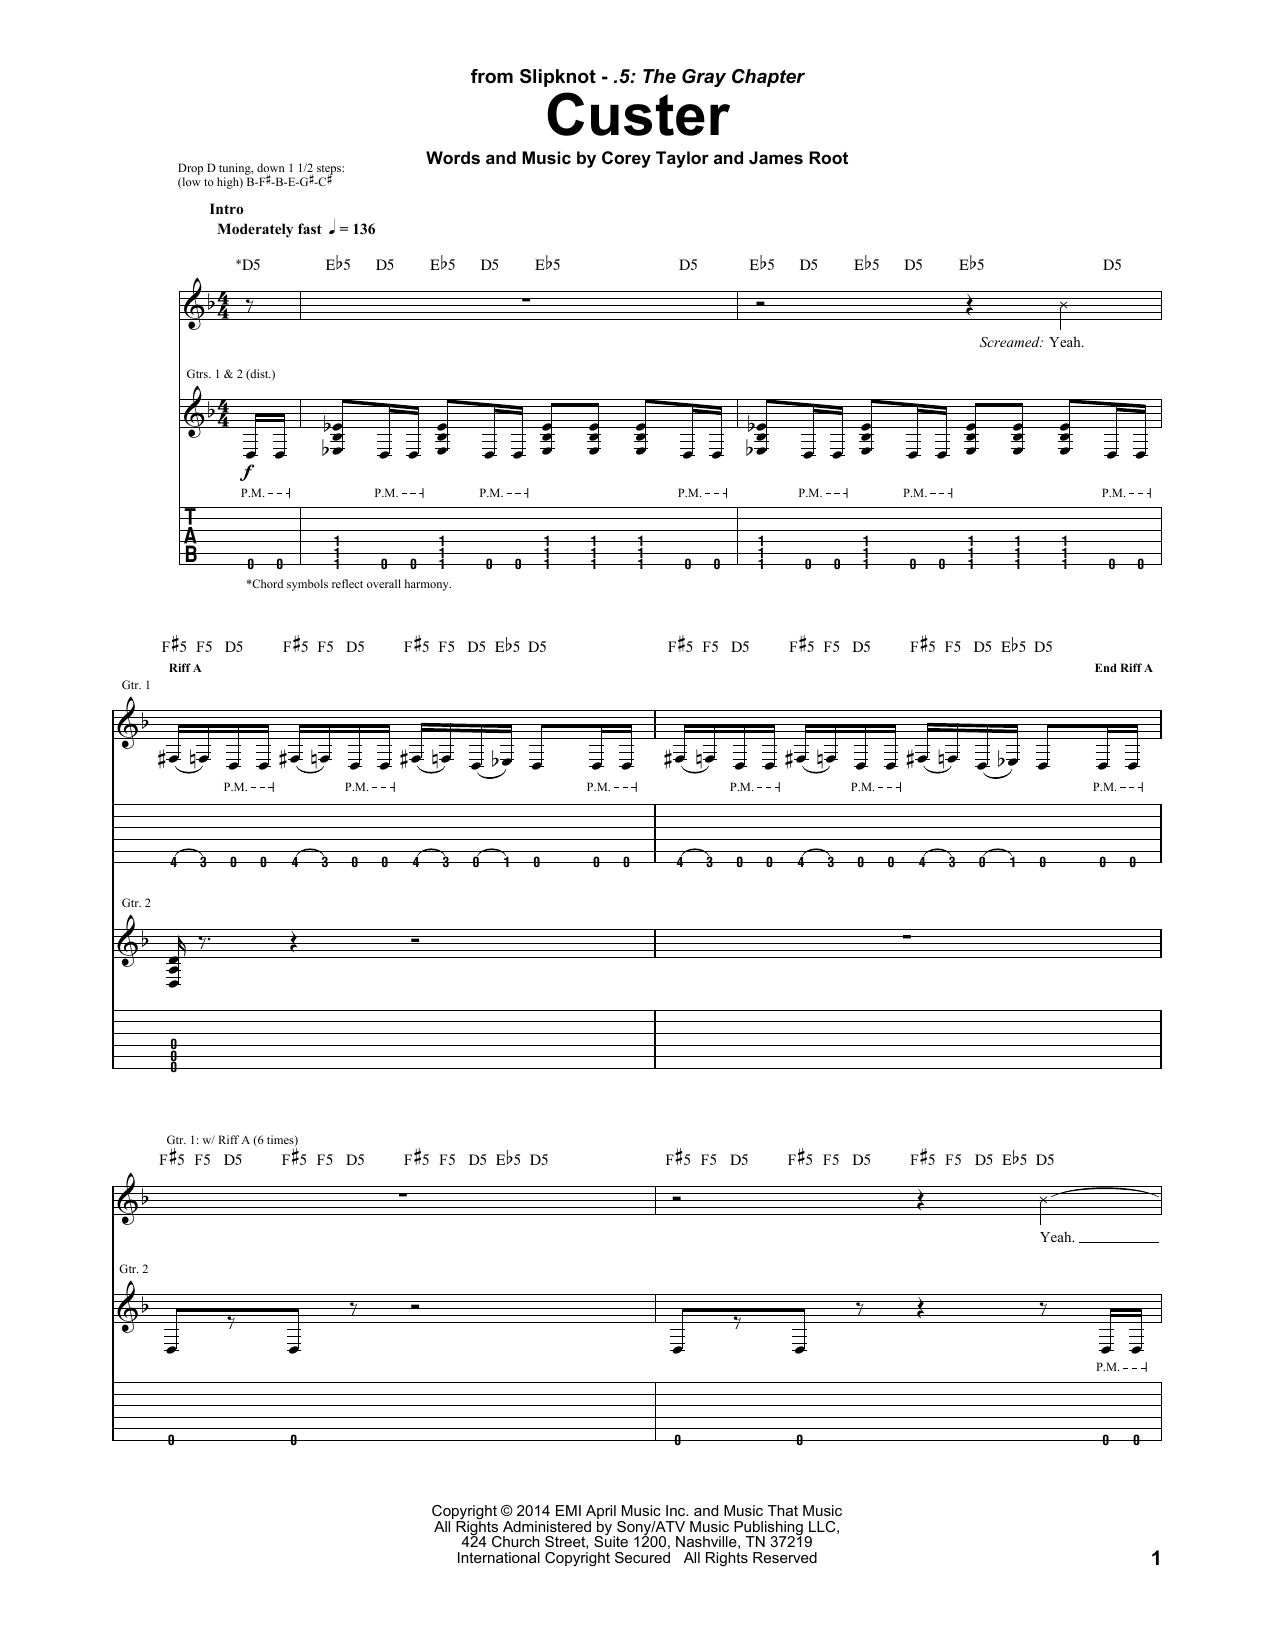 Slipknot Custer Sheet Music Notes & Chords for Guitar Tab - Download or Print PDF